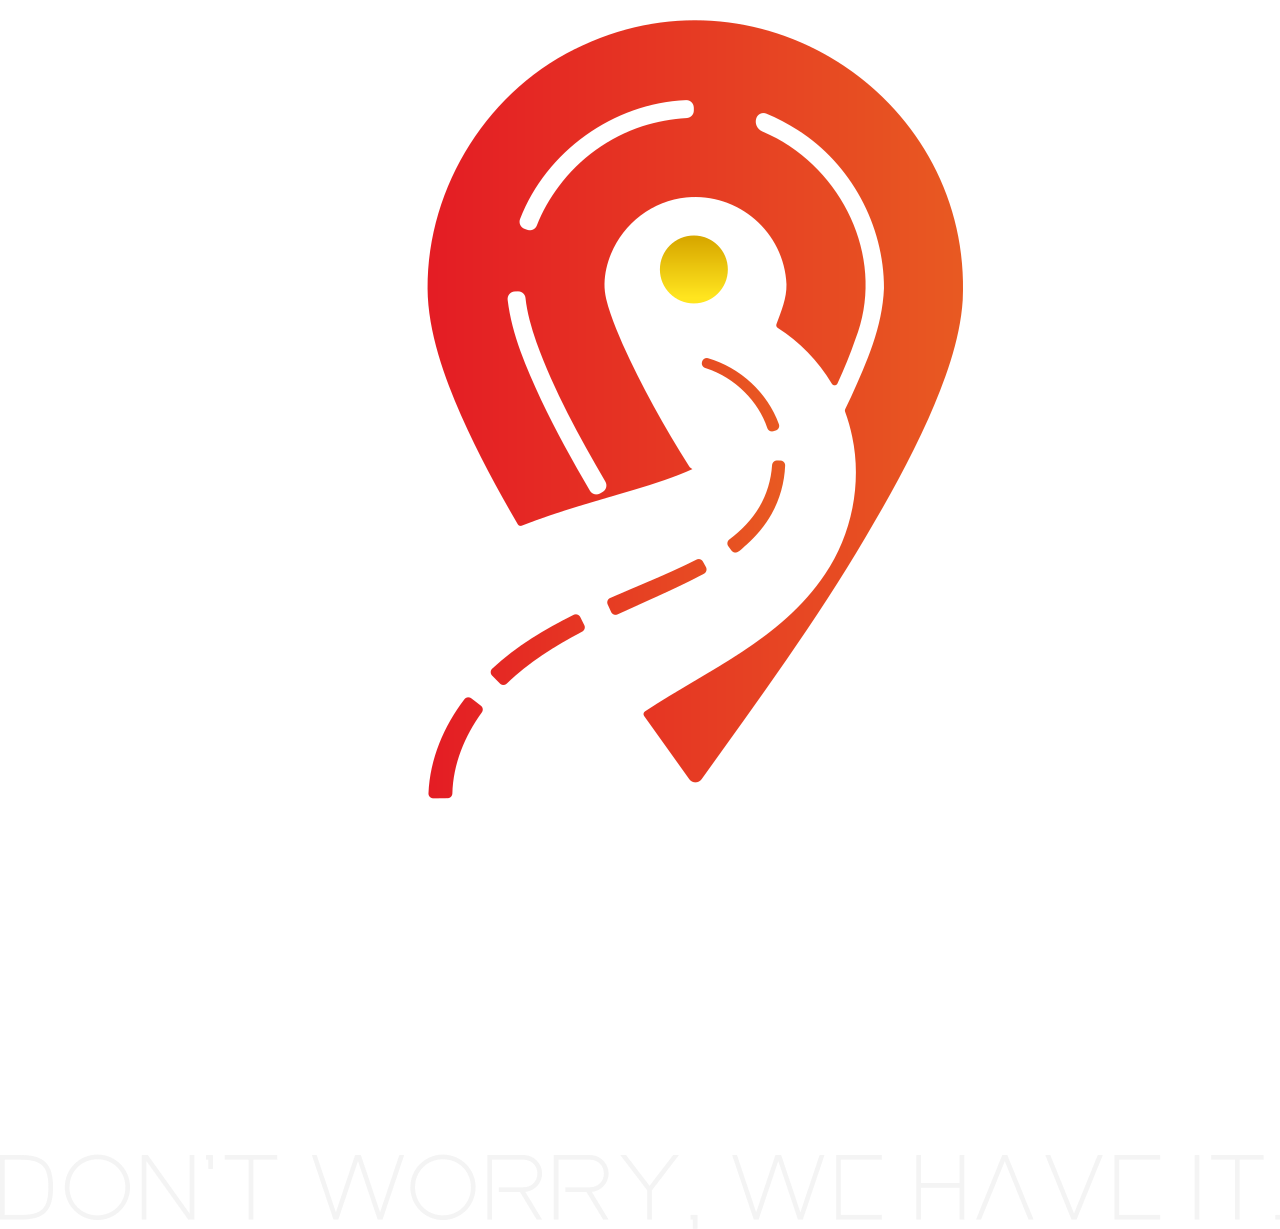 7 Girls St.'s web page